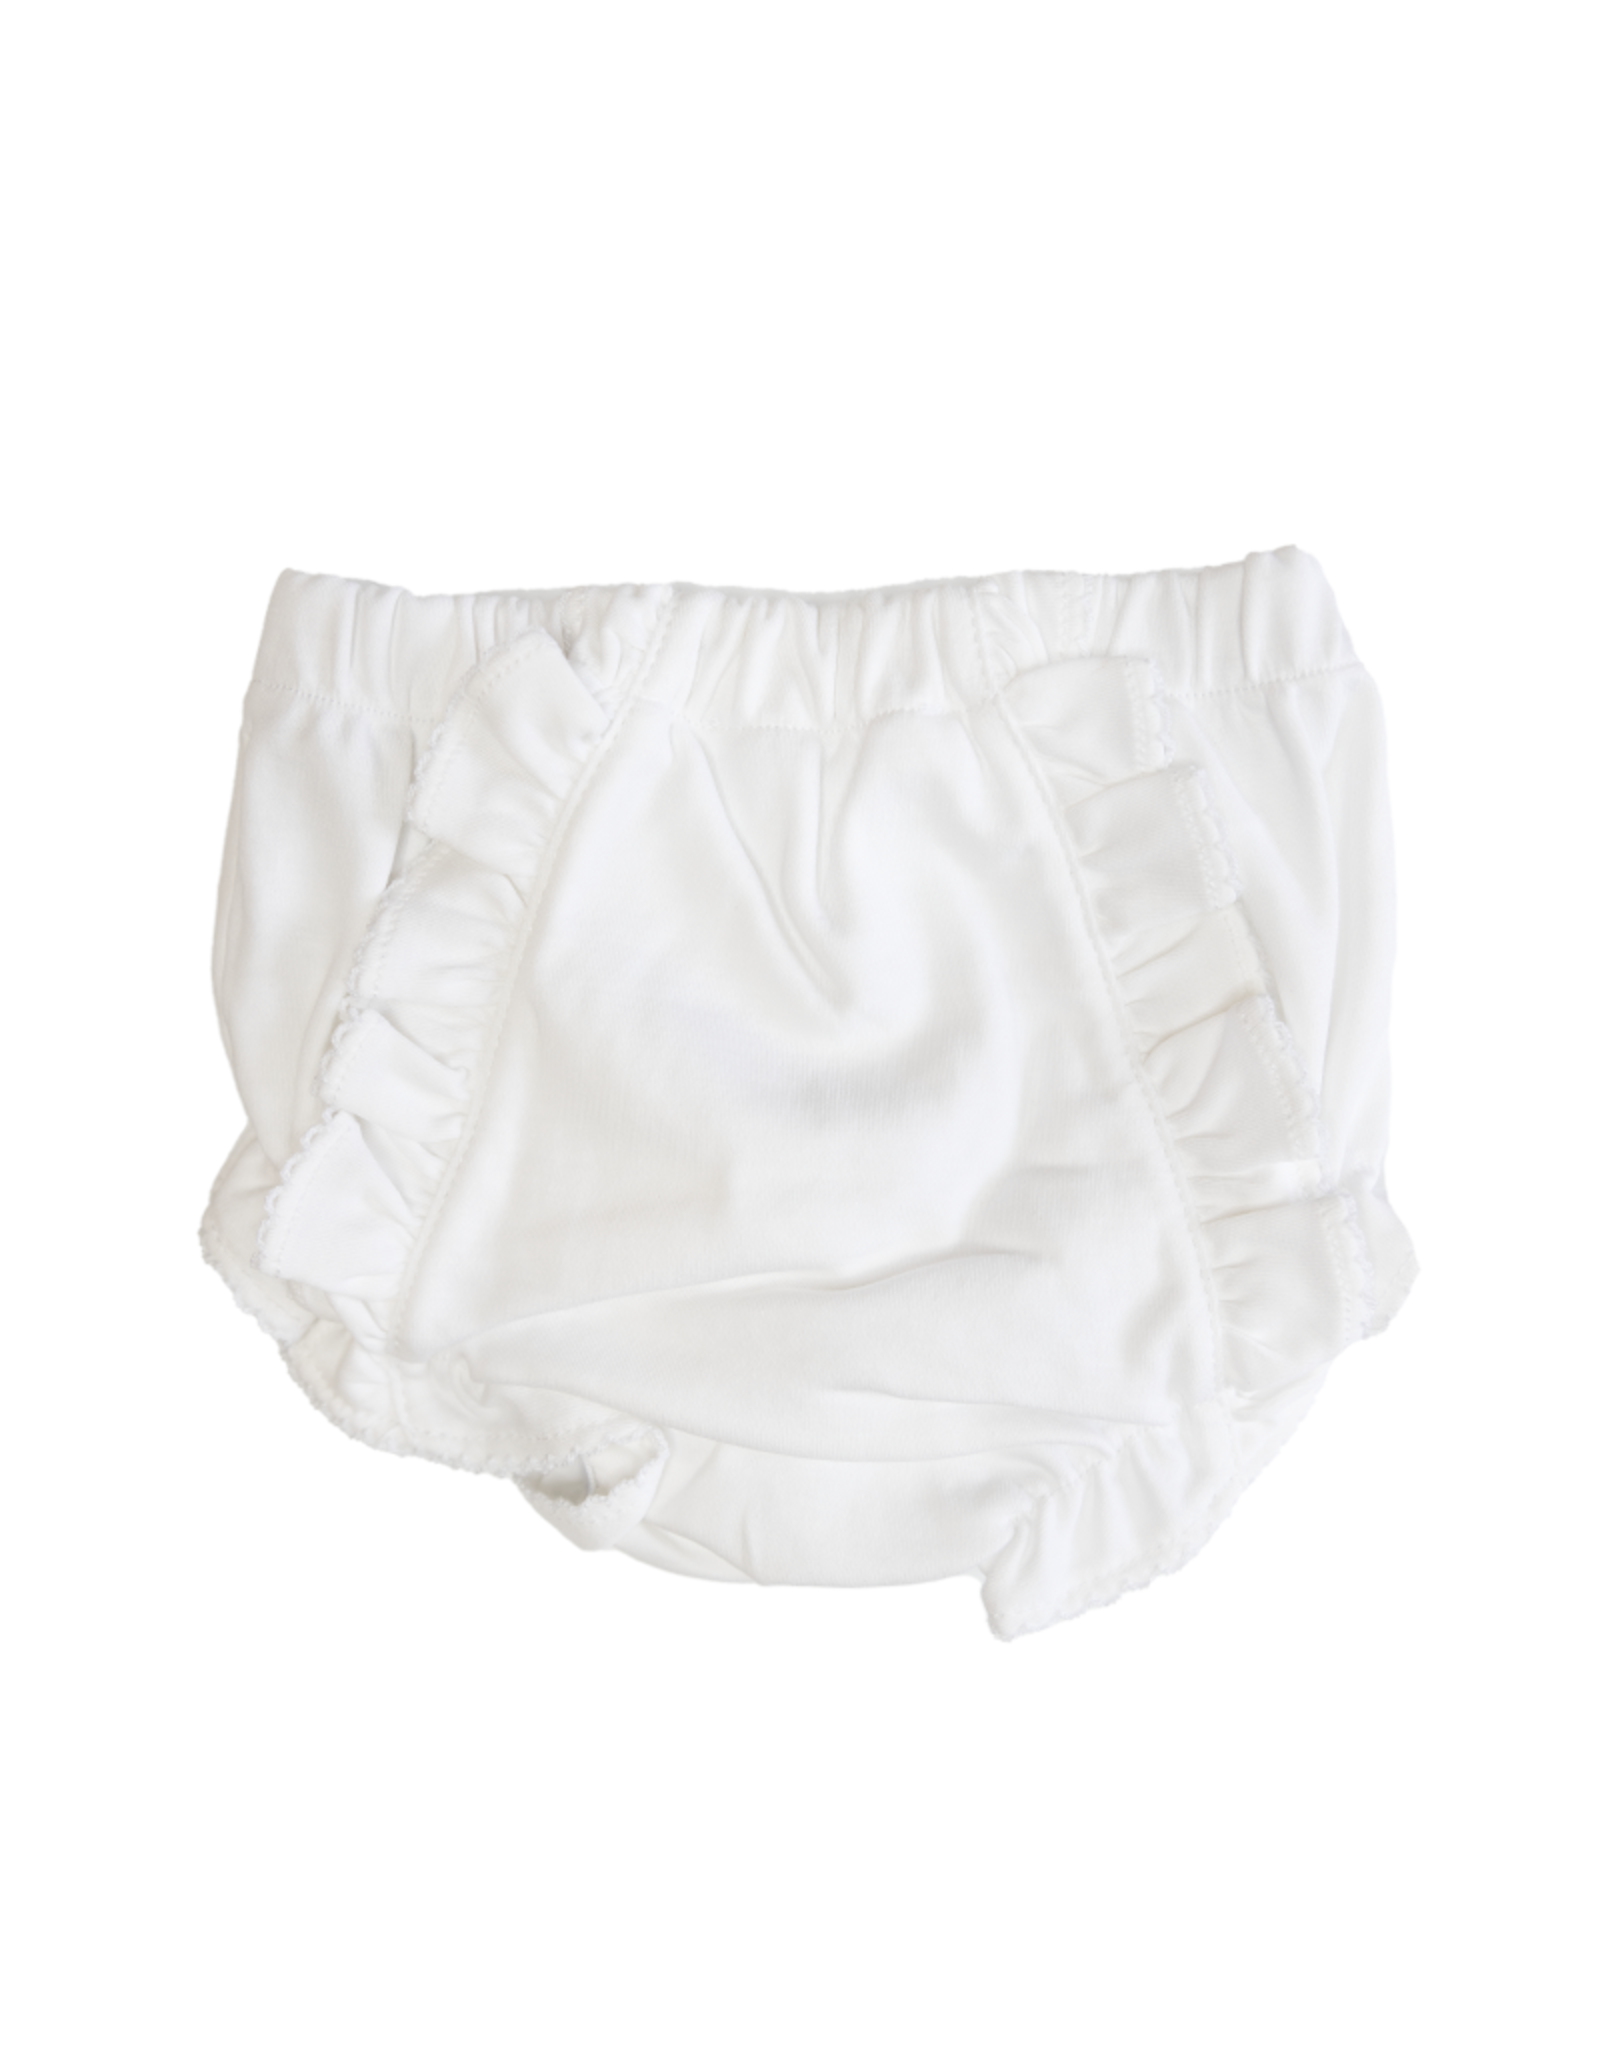 Baby Loren WMD-100 White Pima Knit Diaper Cover